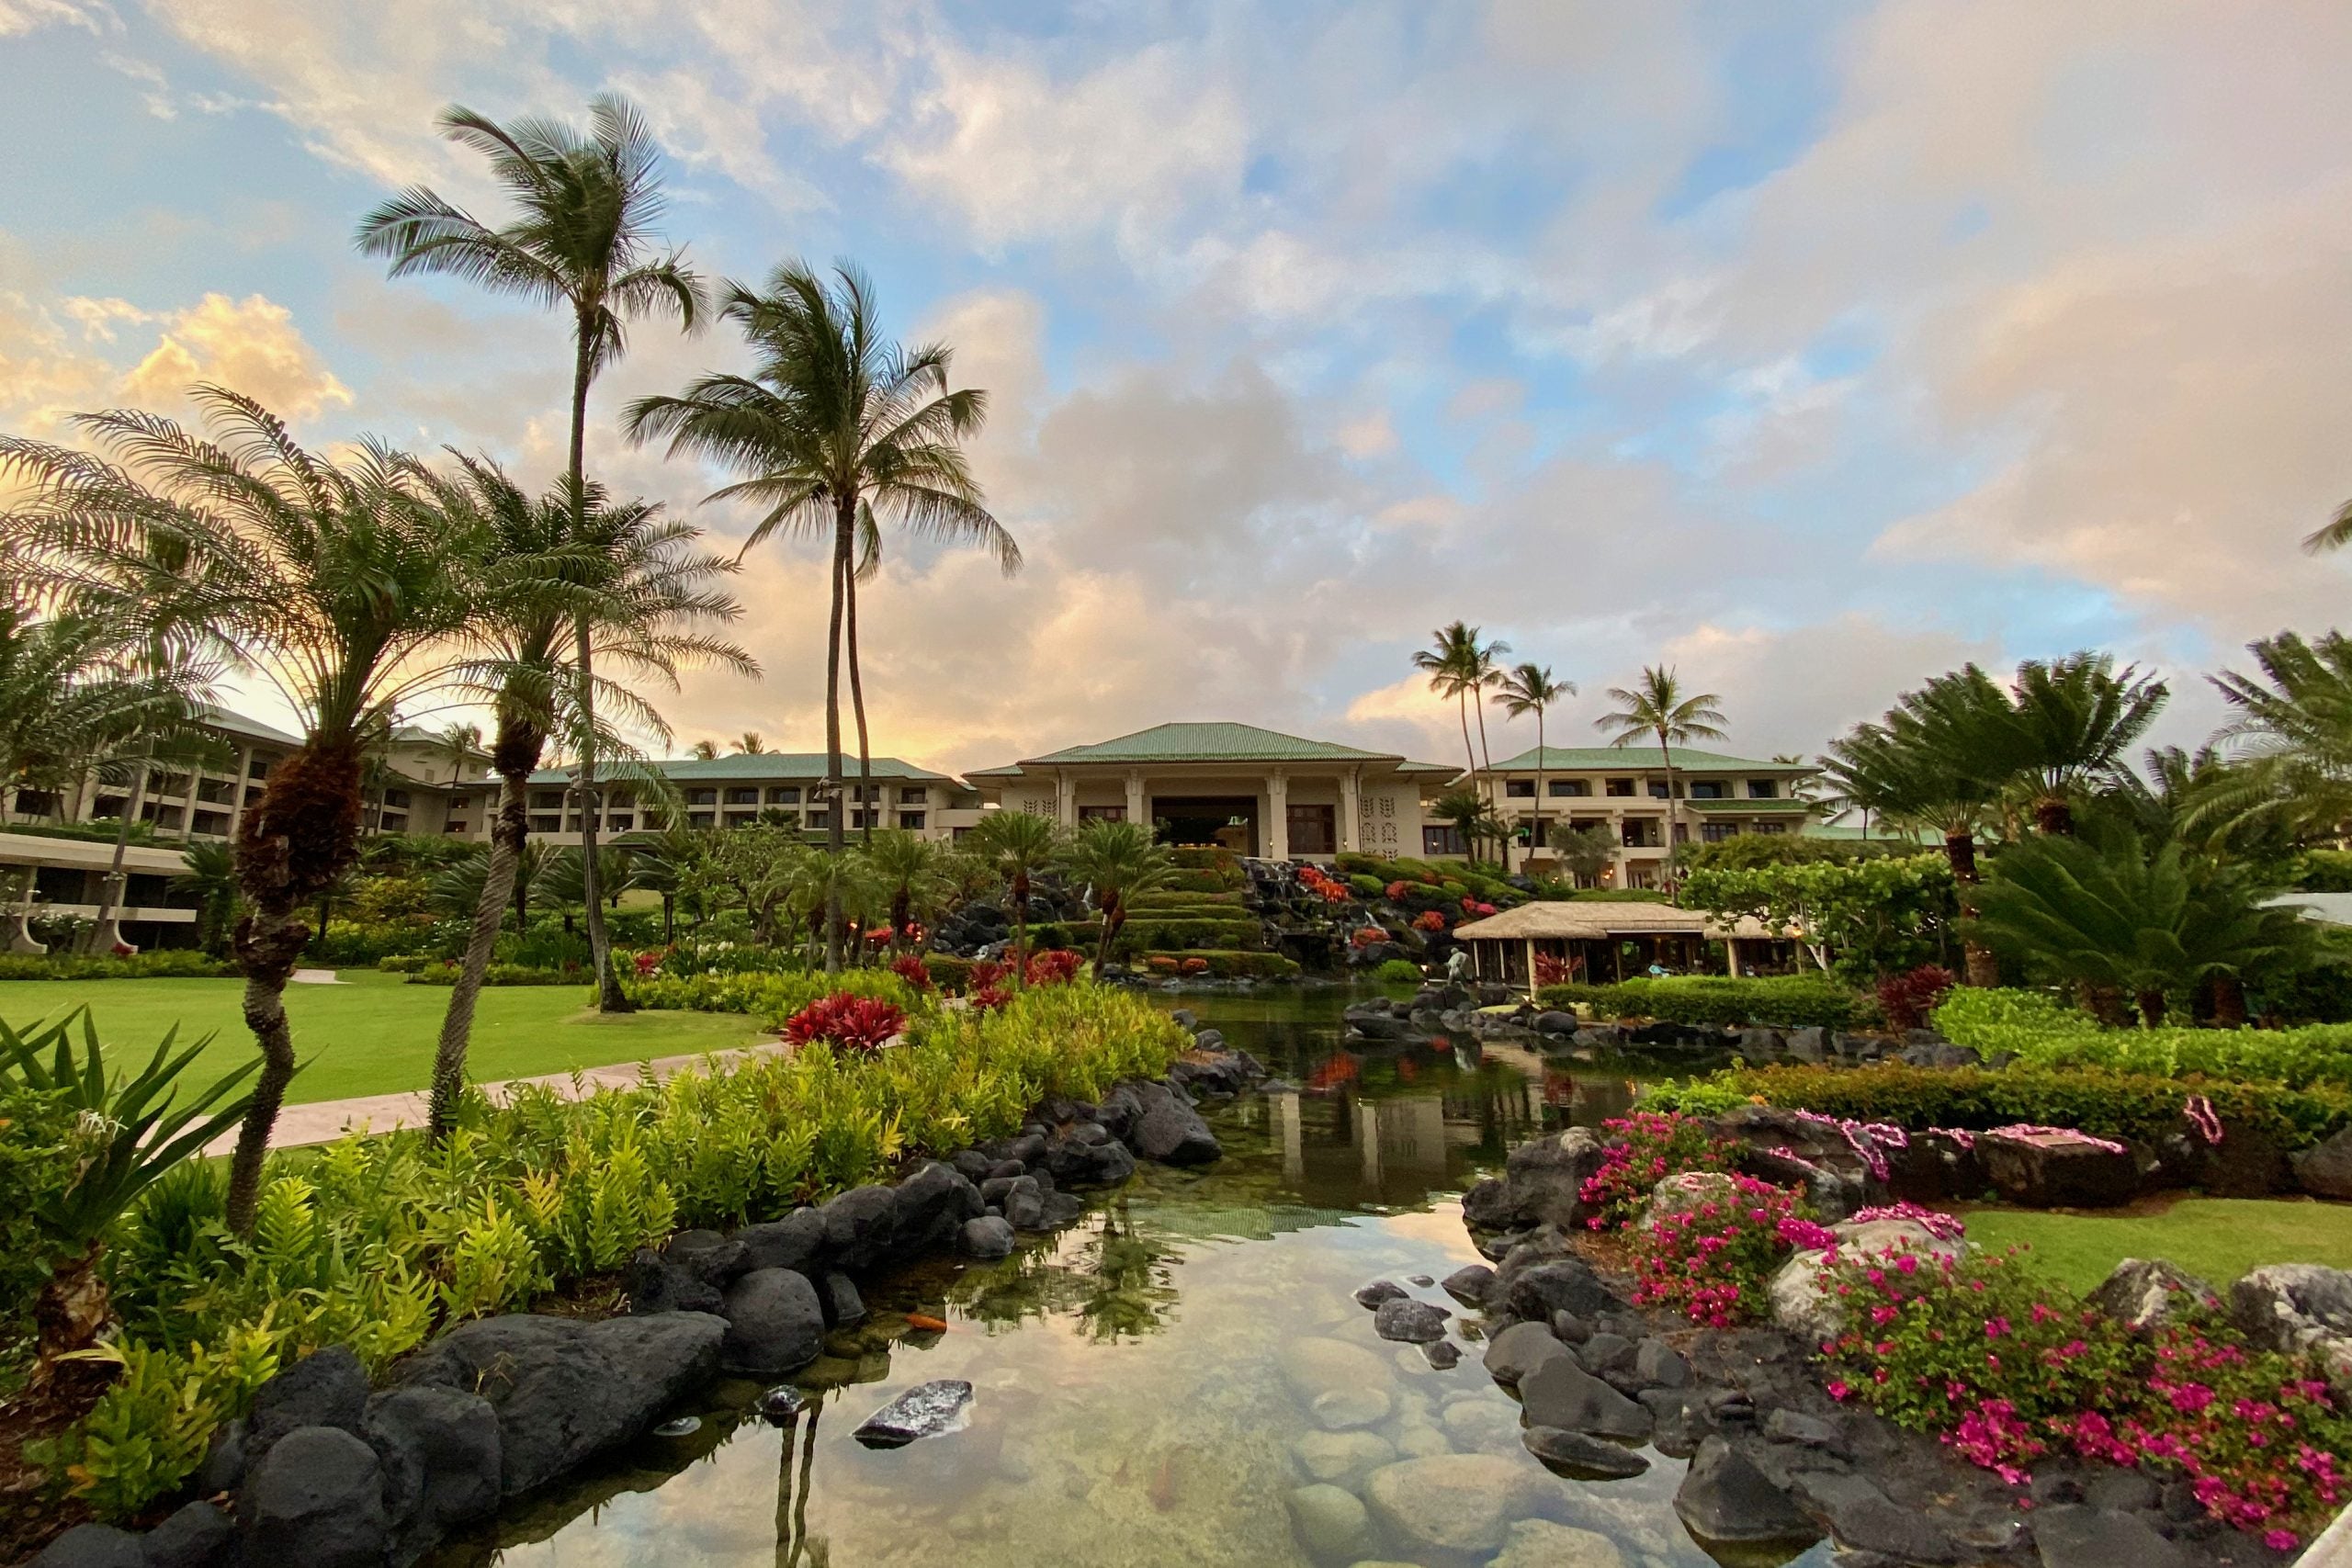 kauai travel restrictions update